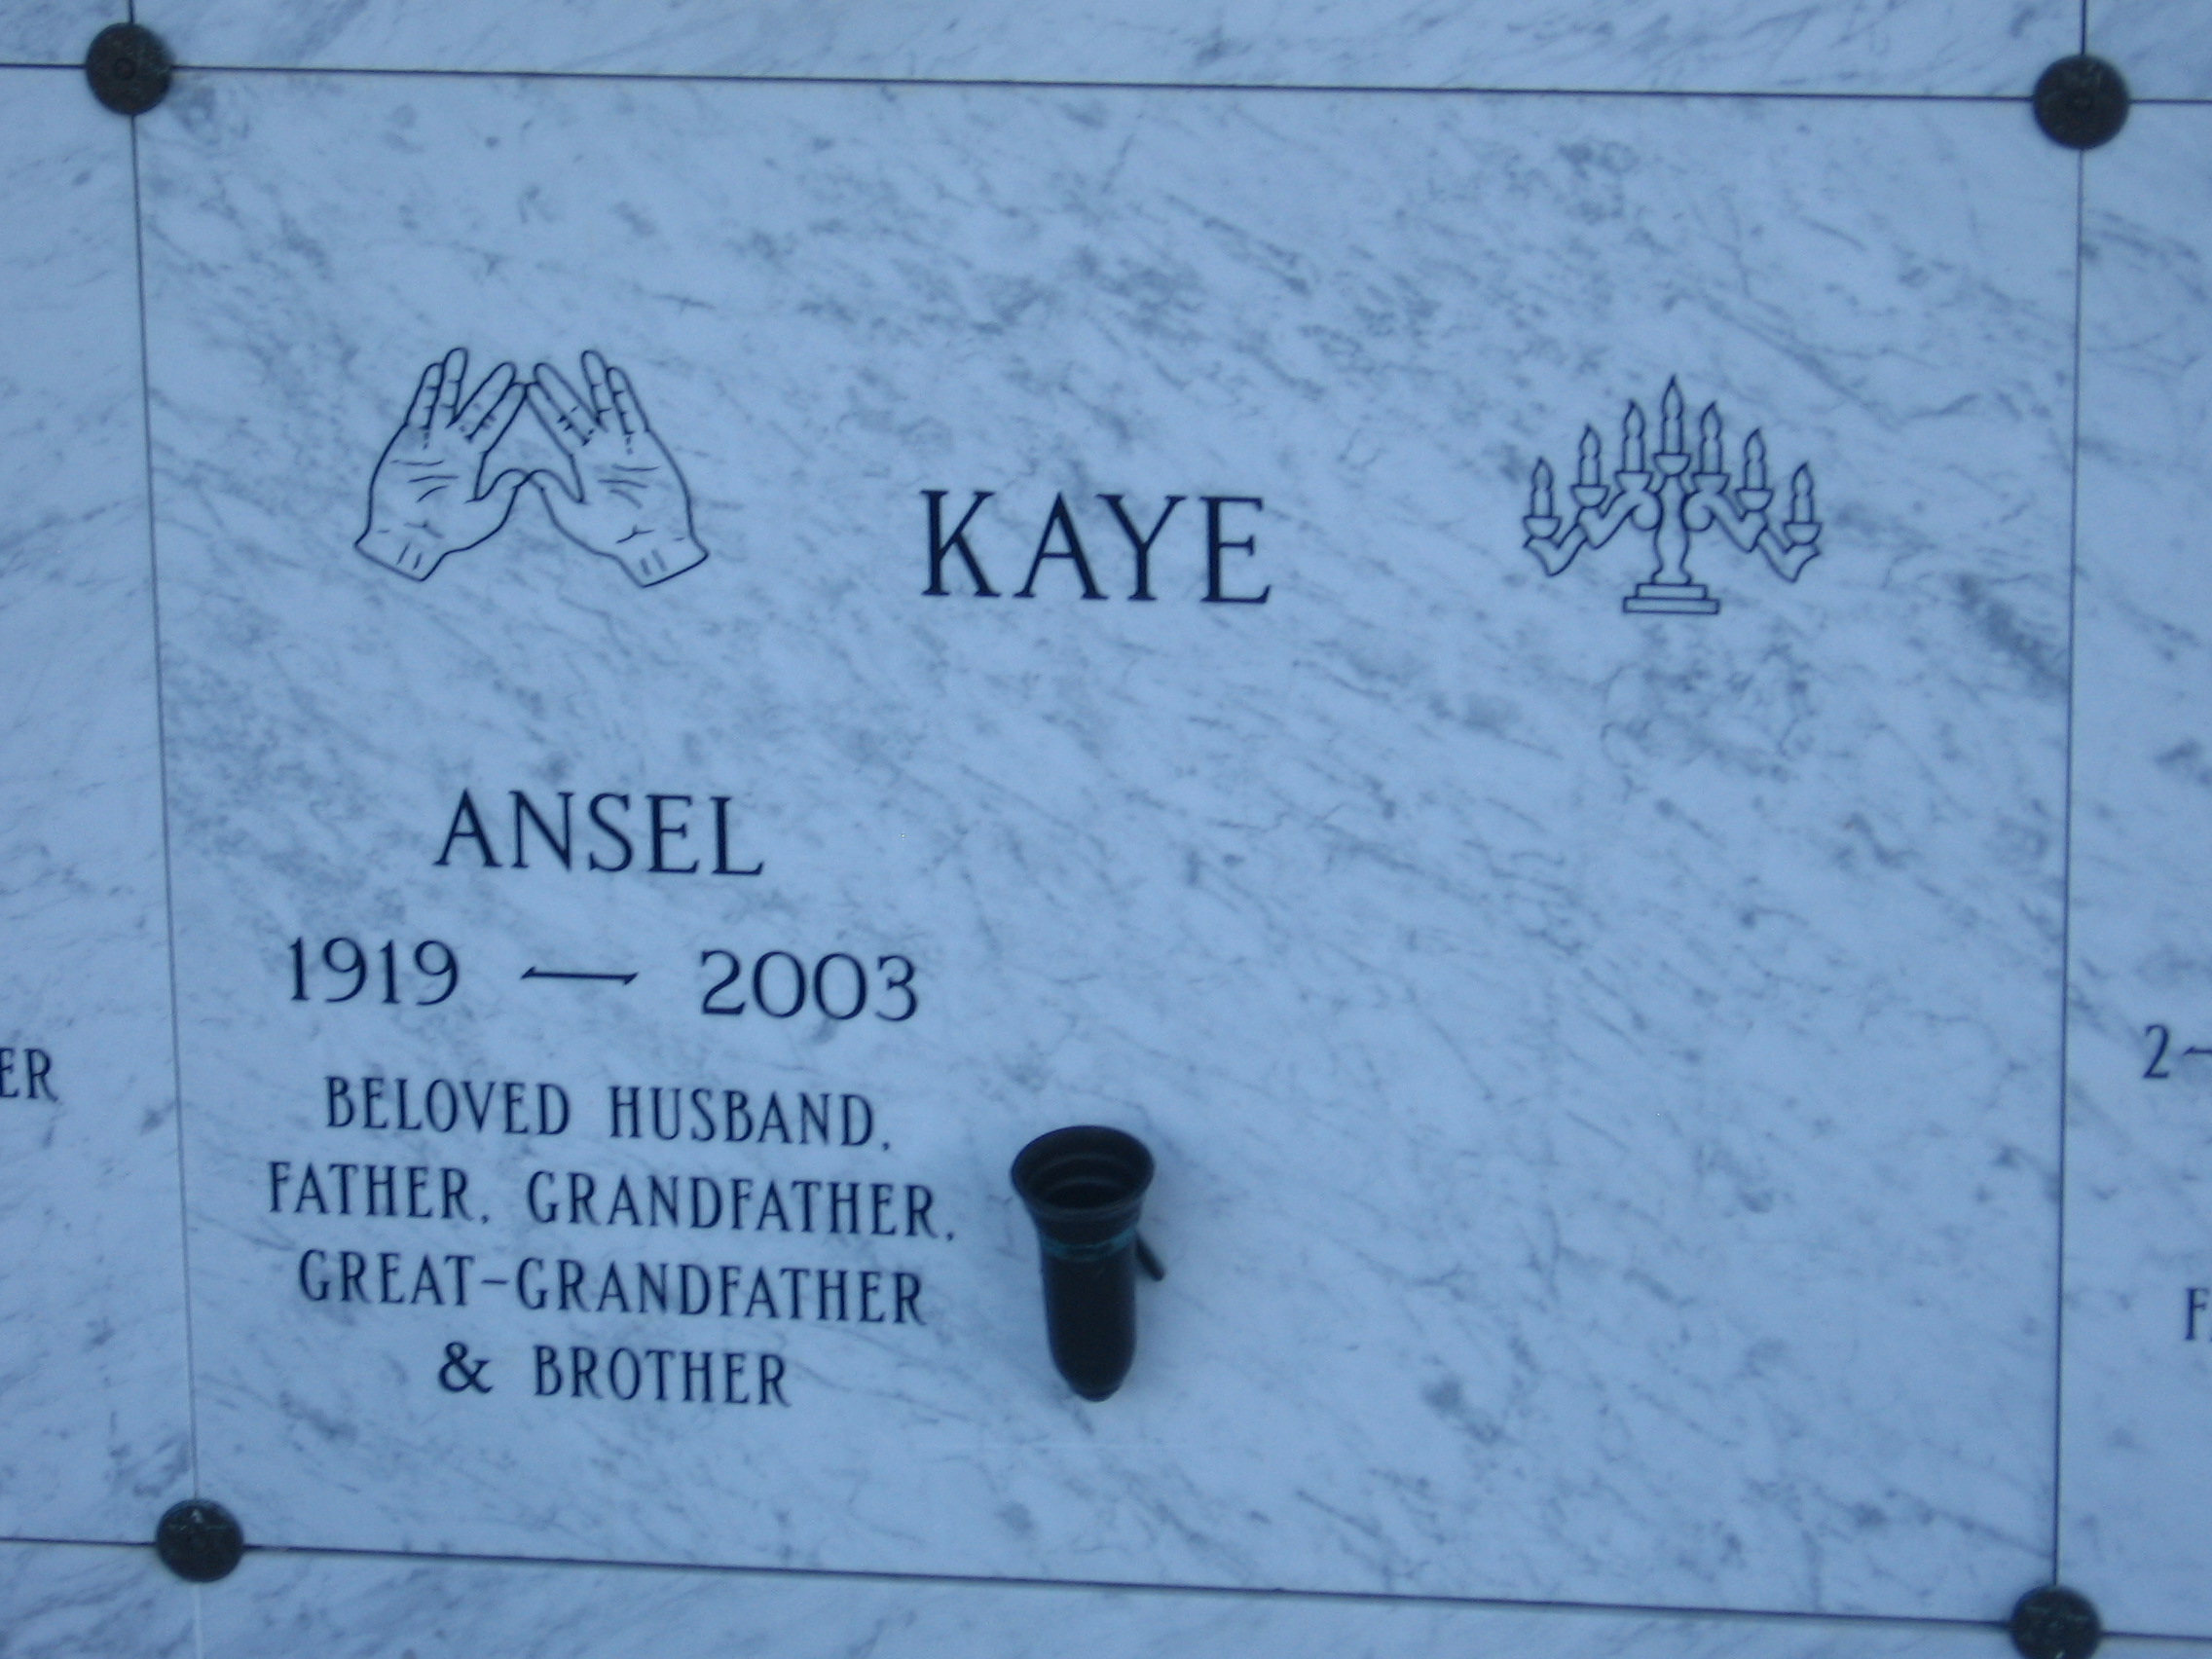 Ansel Kaye